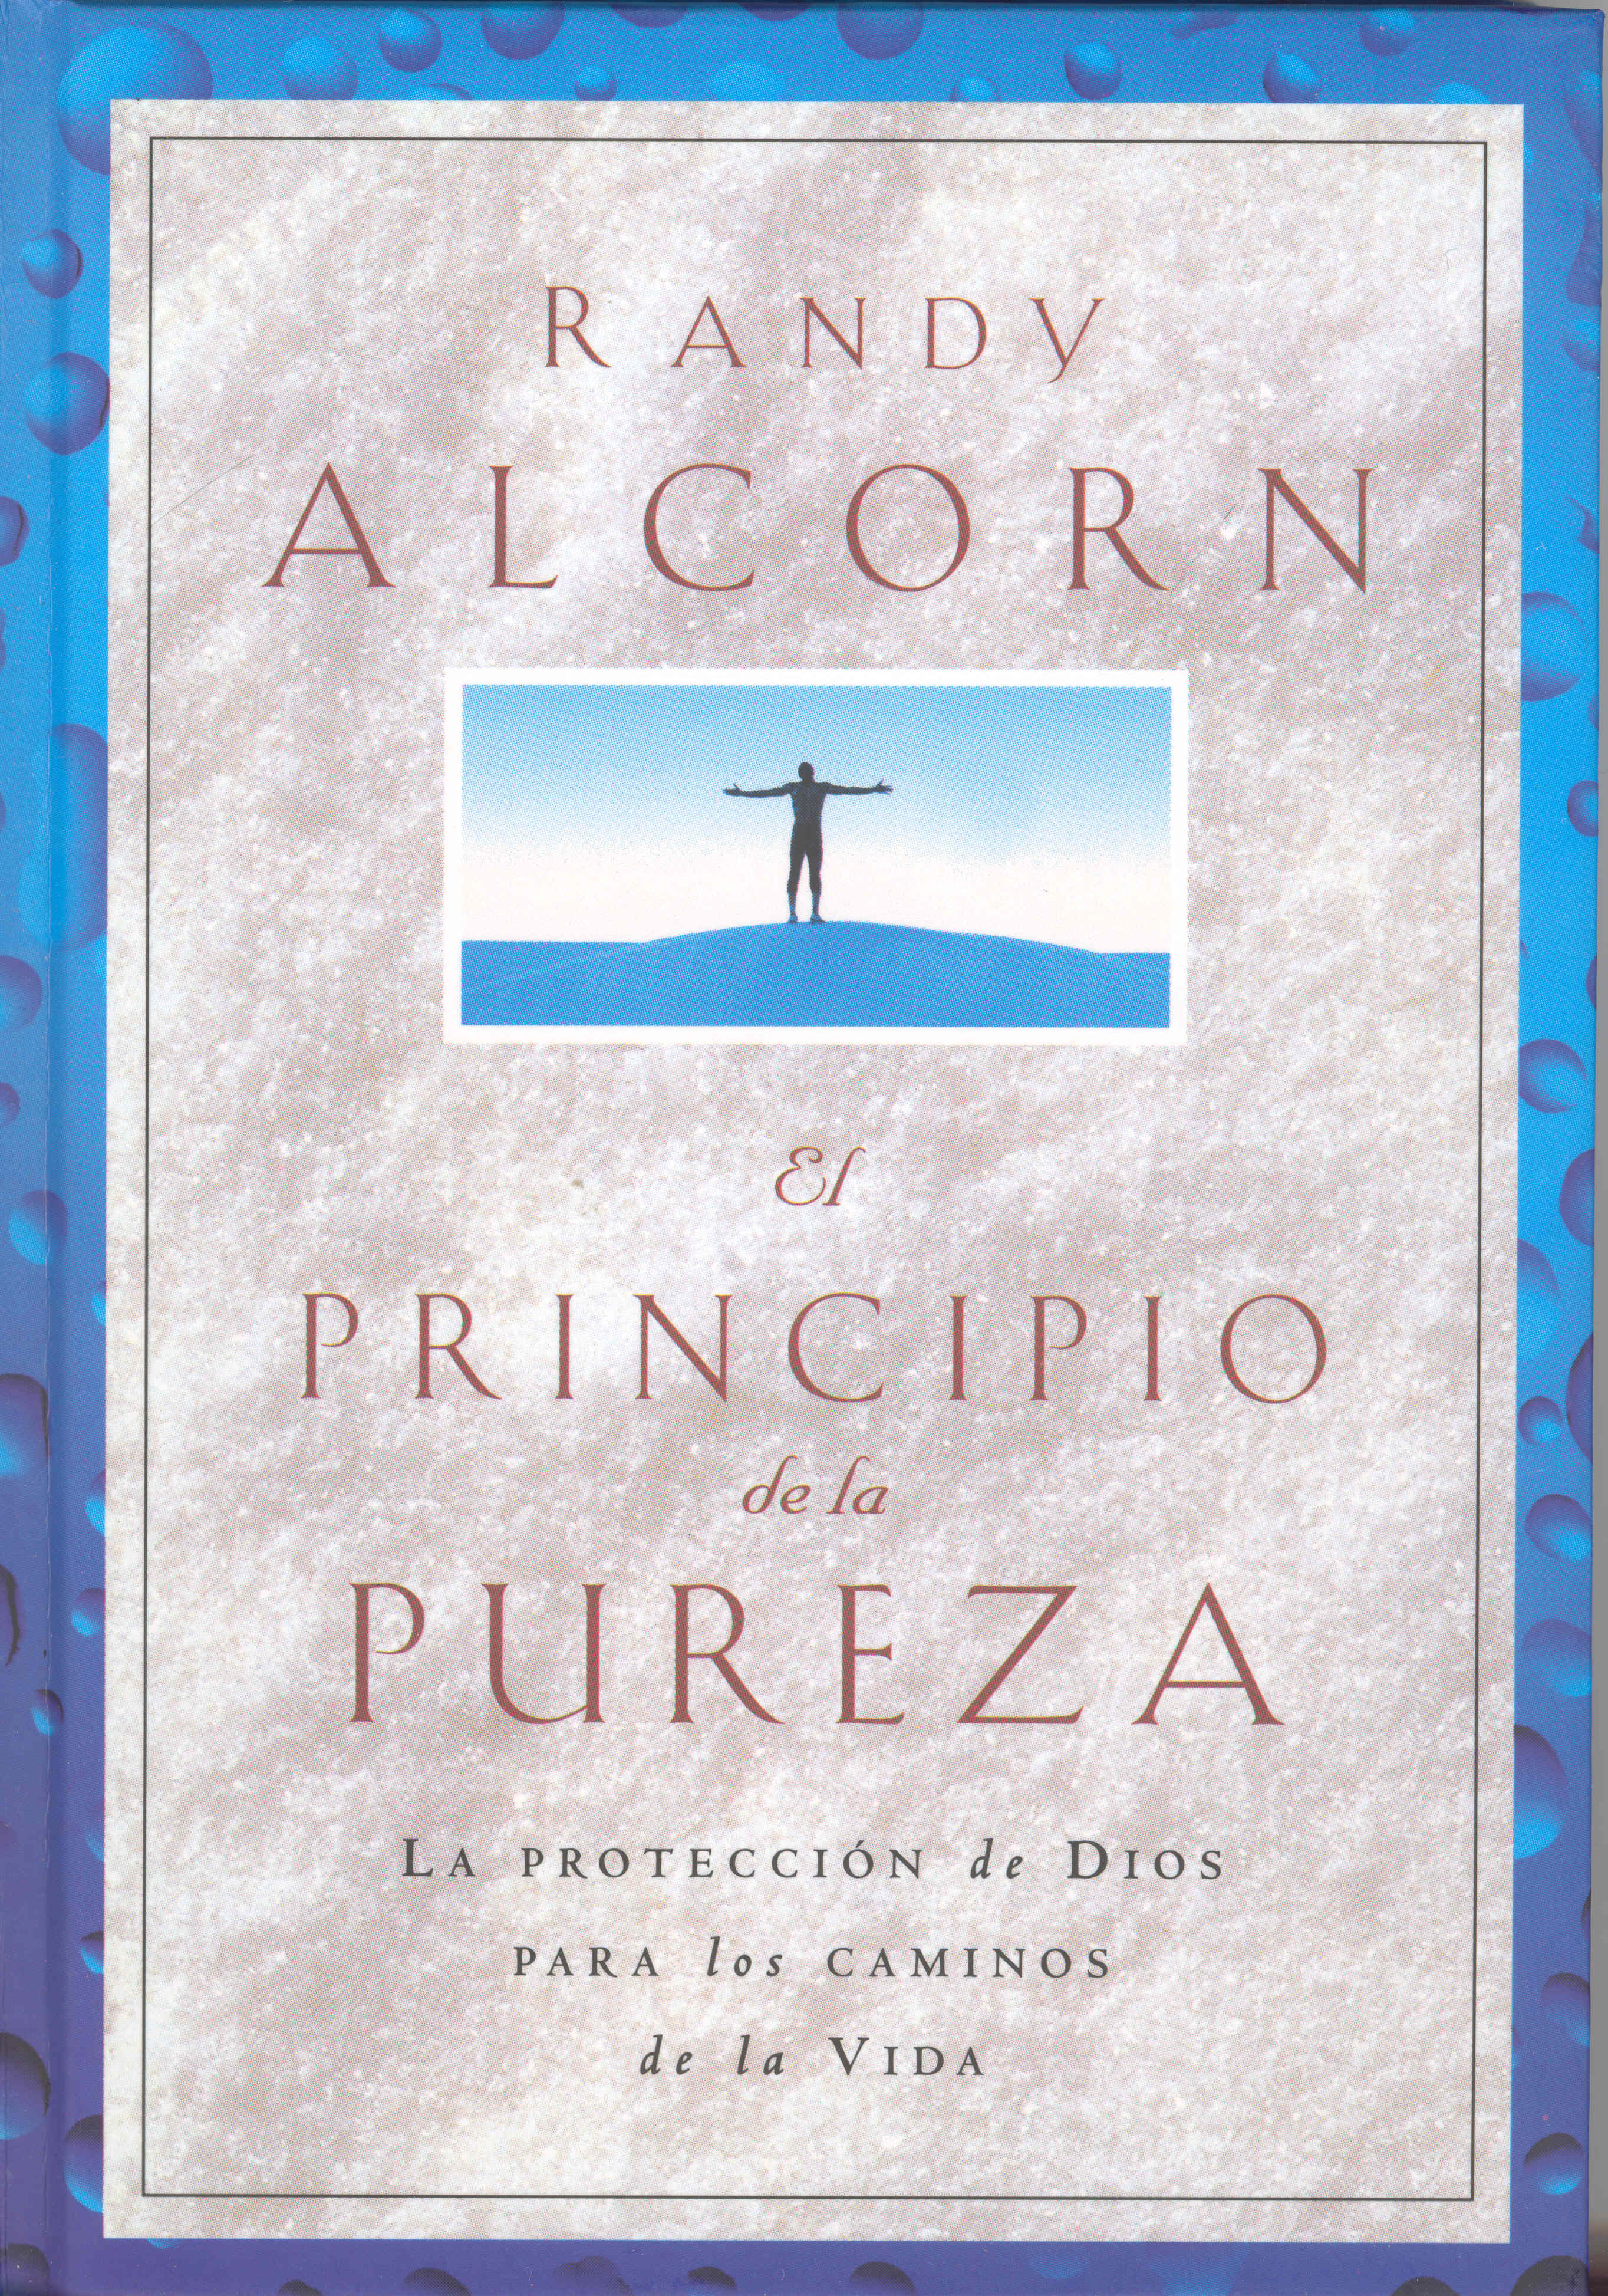 The Purity Principle in Spanish